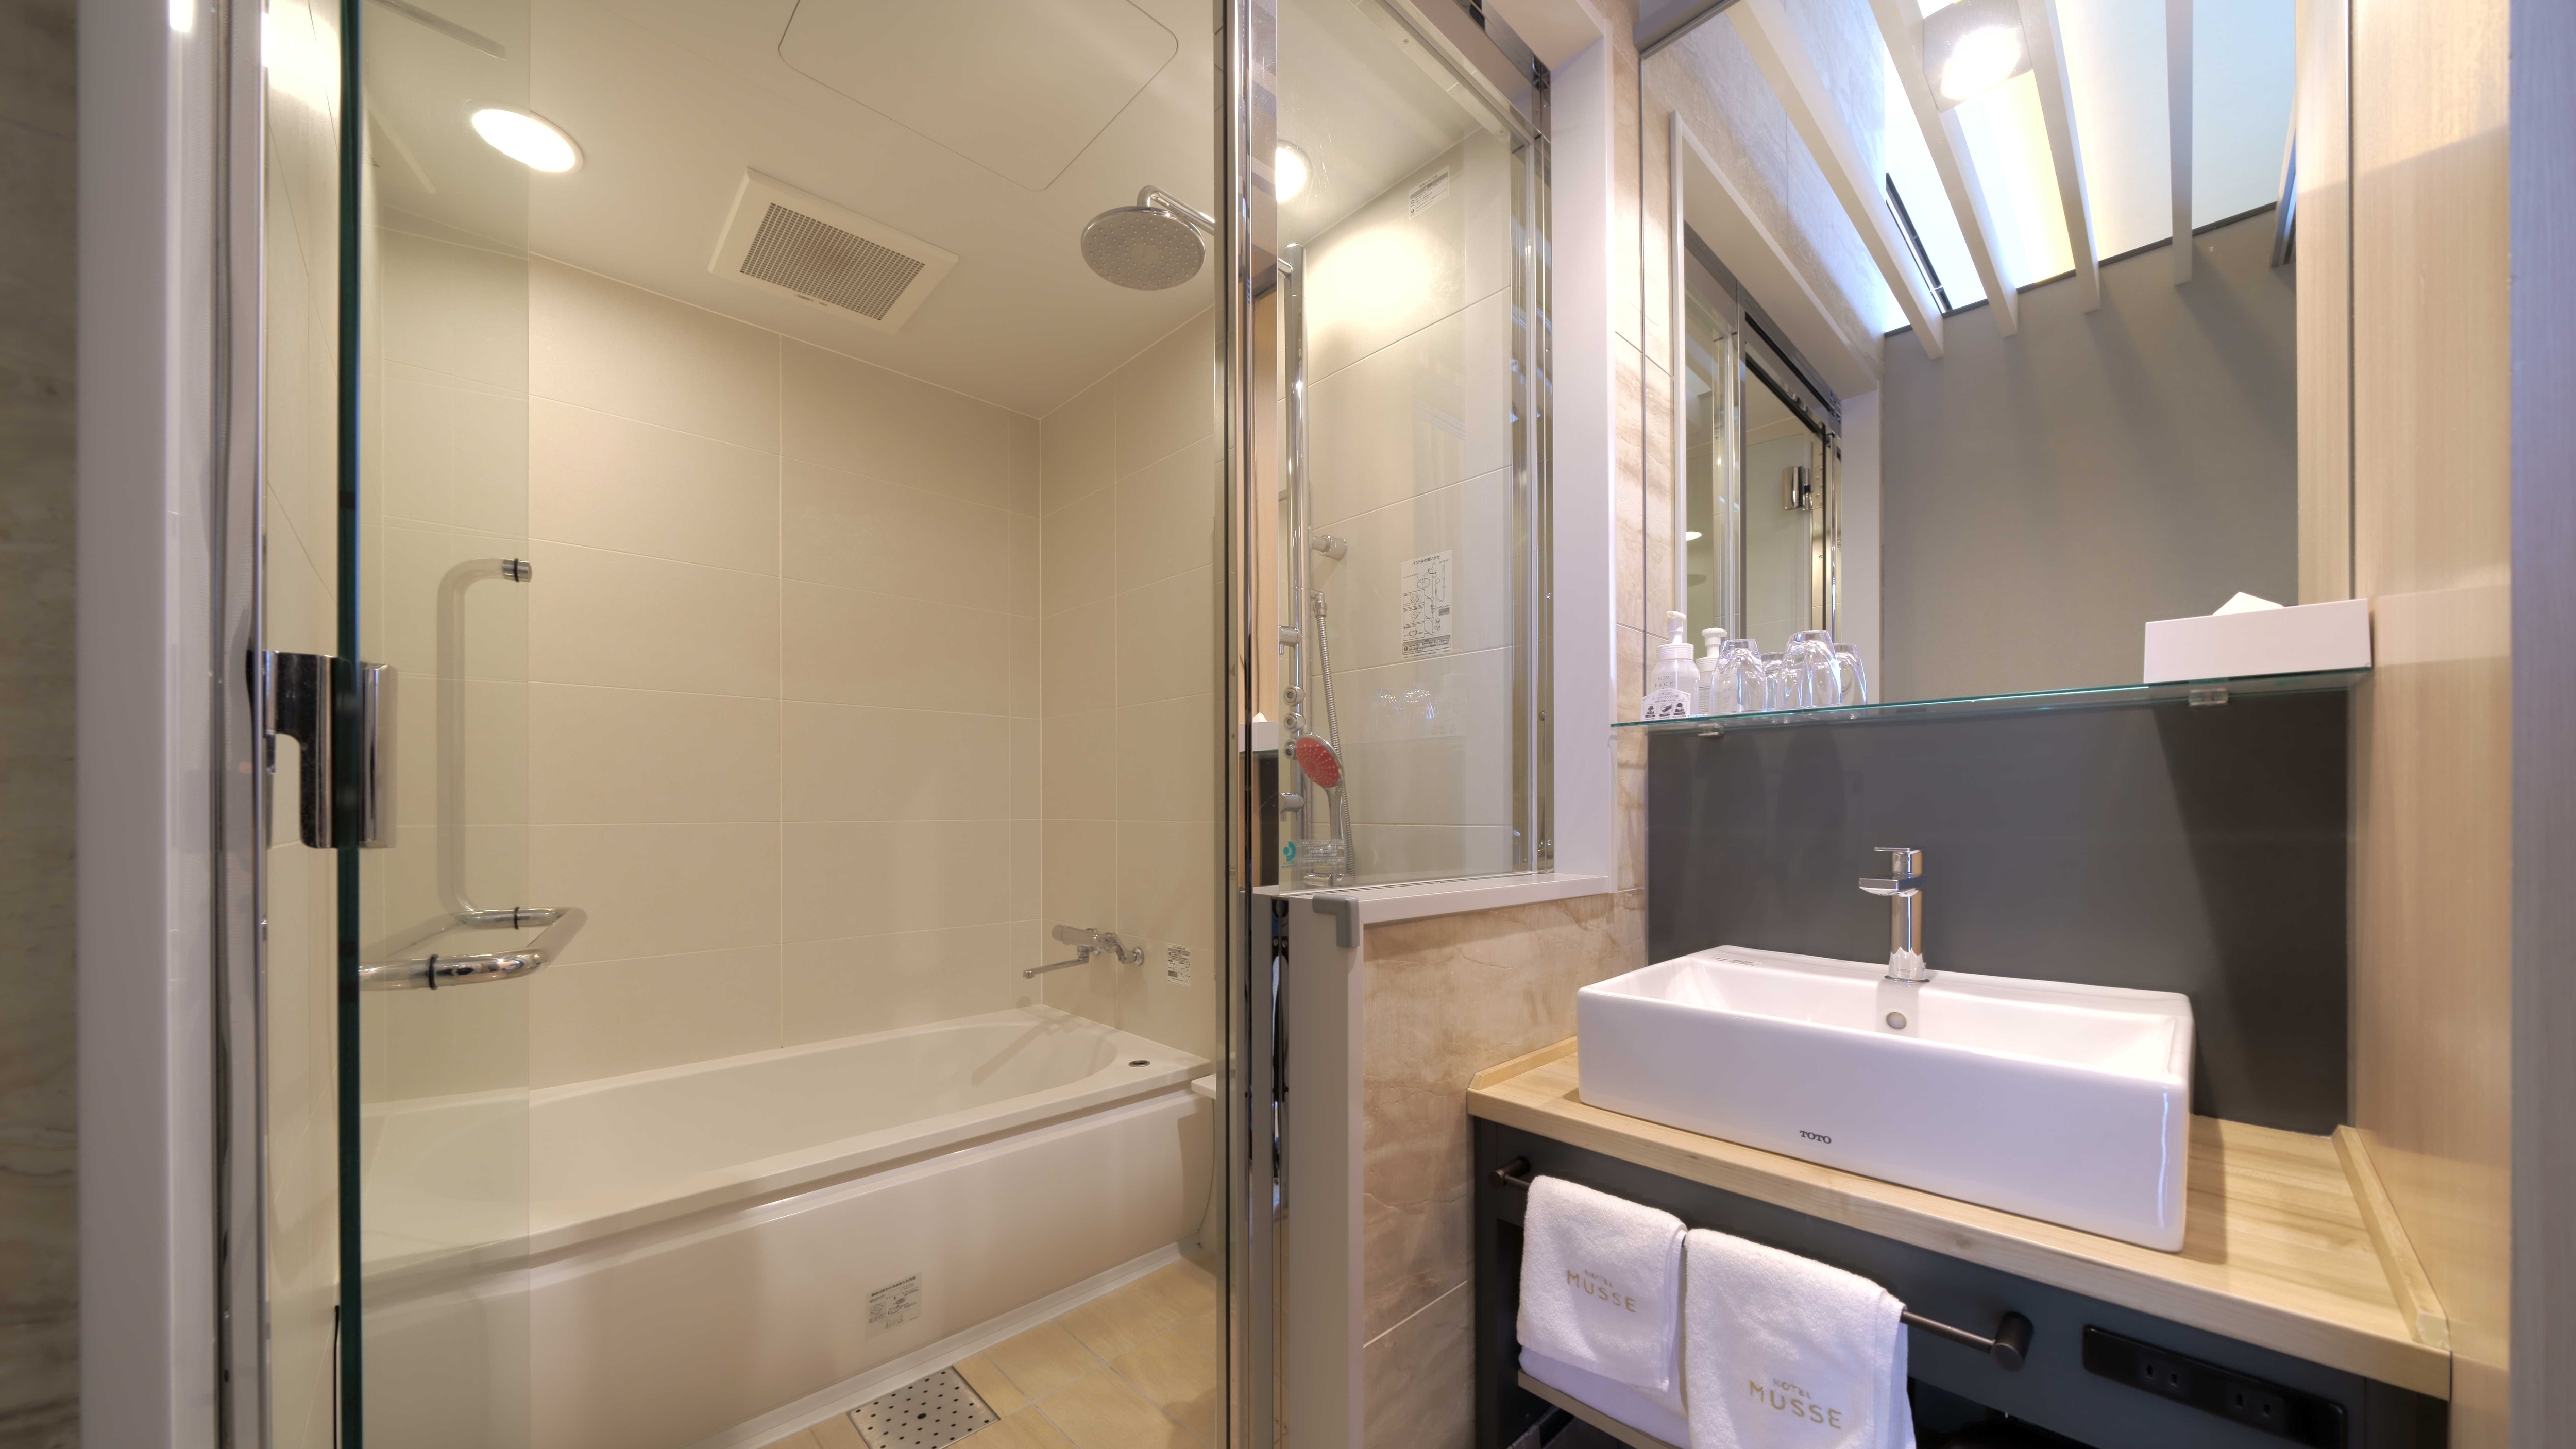 Top floor bathroom (1416 size). Equipped with bathtub, shower (overhead body shower), washroom